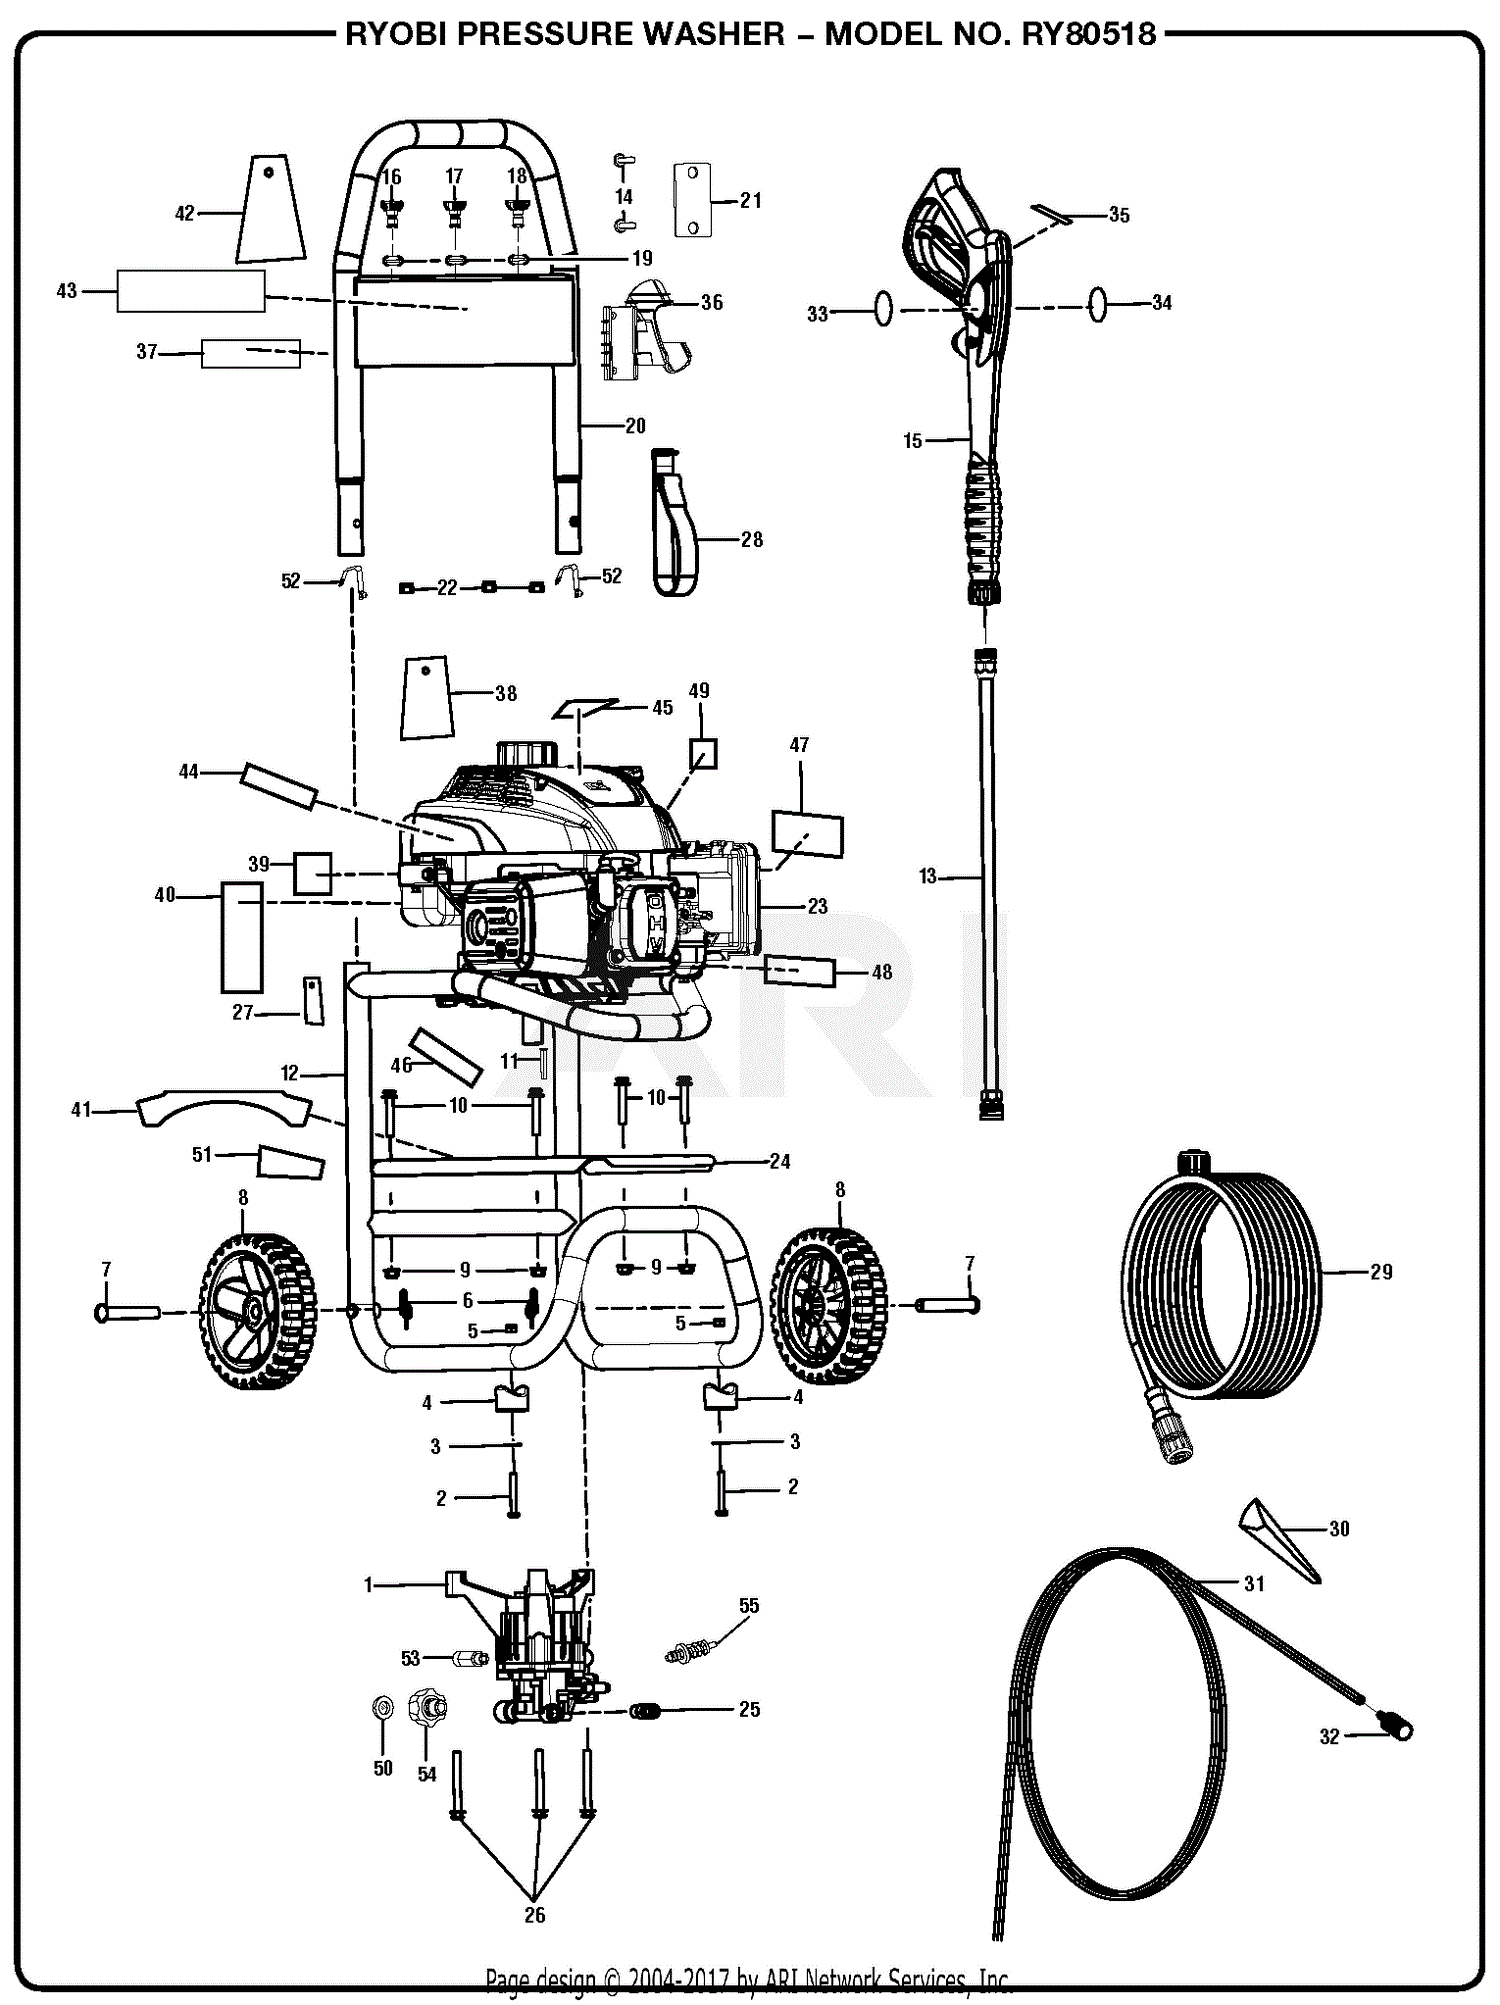 31 Ryobi Pressure Washer Parts Diagram - Wiring Diagram Database